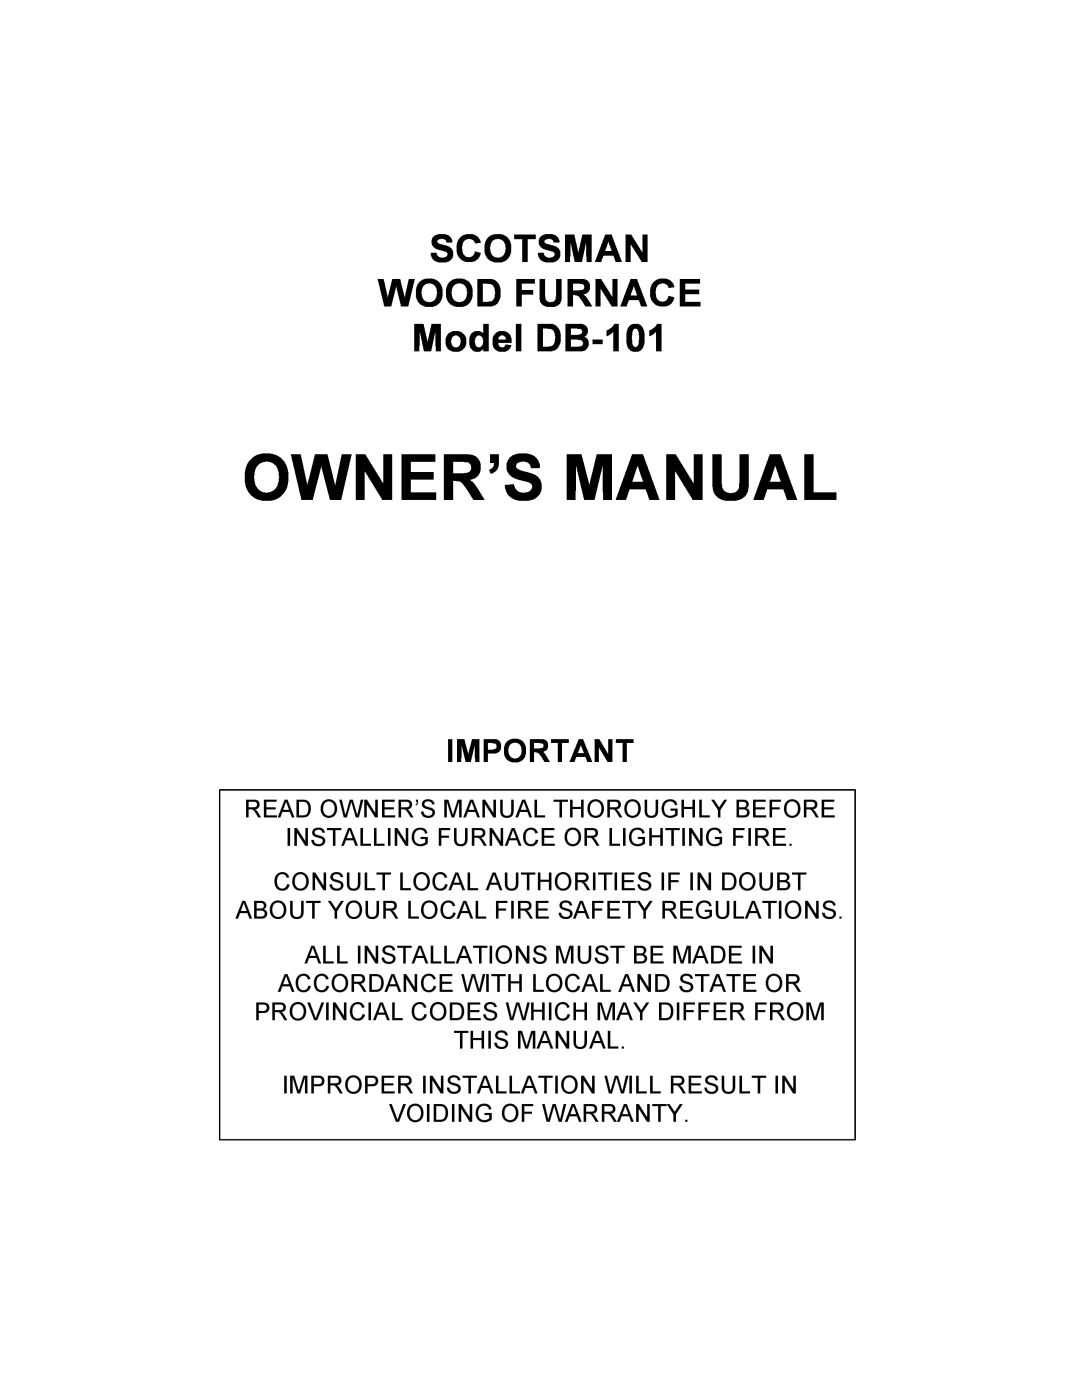 Scotsman Ice owner manual SCOTSMAN WOOD FURNACE Model DB-101 